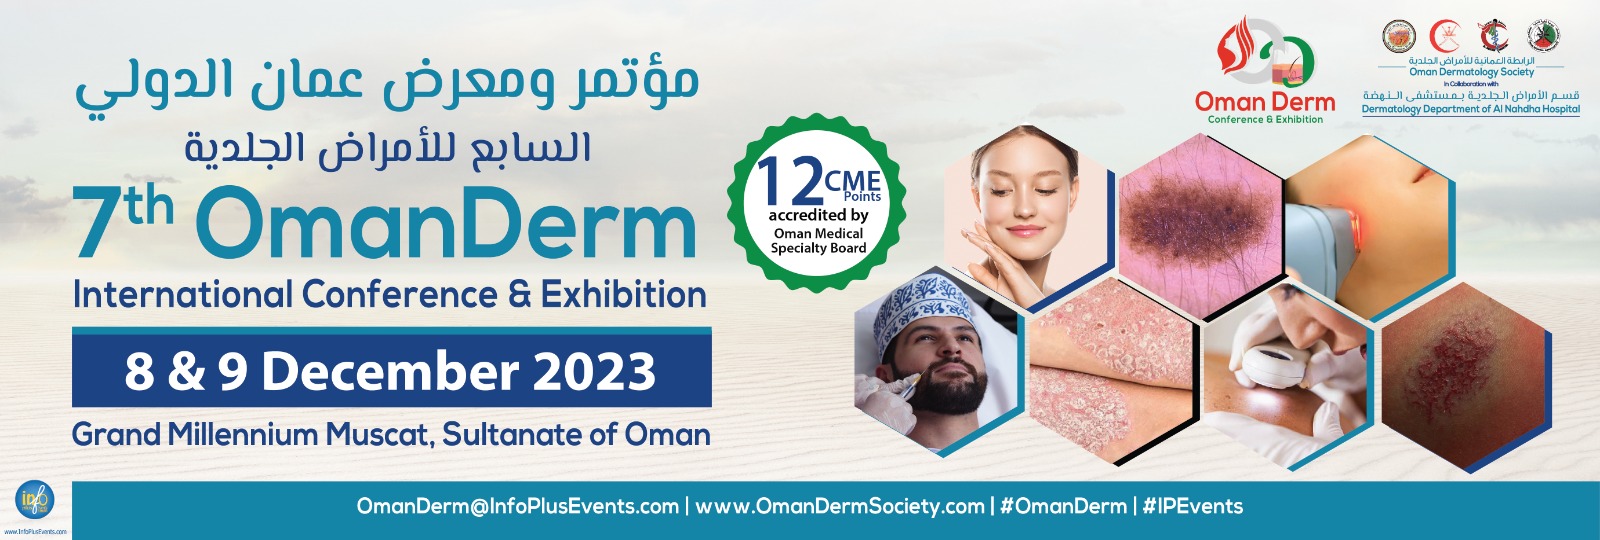 7TH OMAN DERM INTERNATIONAL CONFERENCE & EXHIBITION, Madinat Qabus, Muscat, Oman